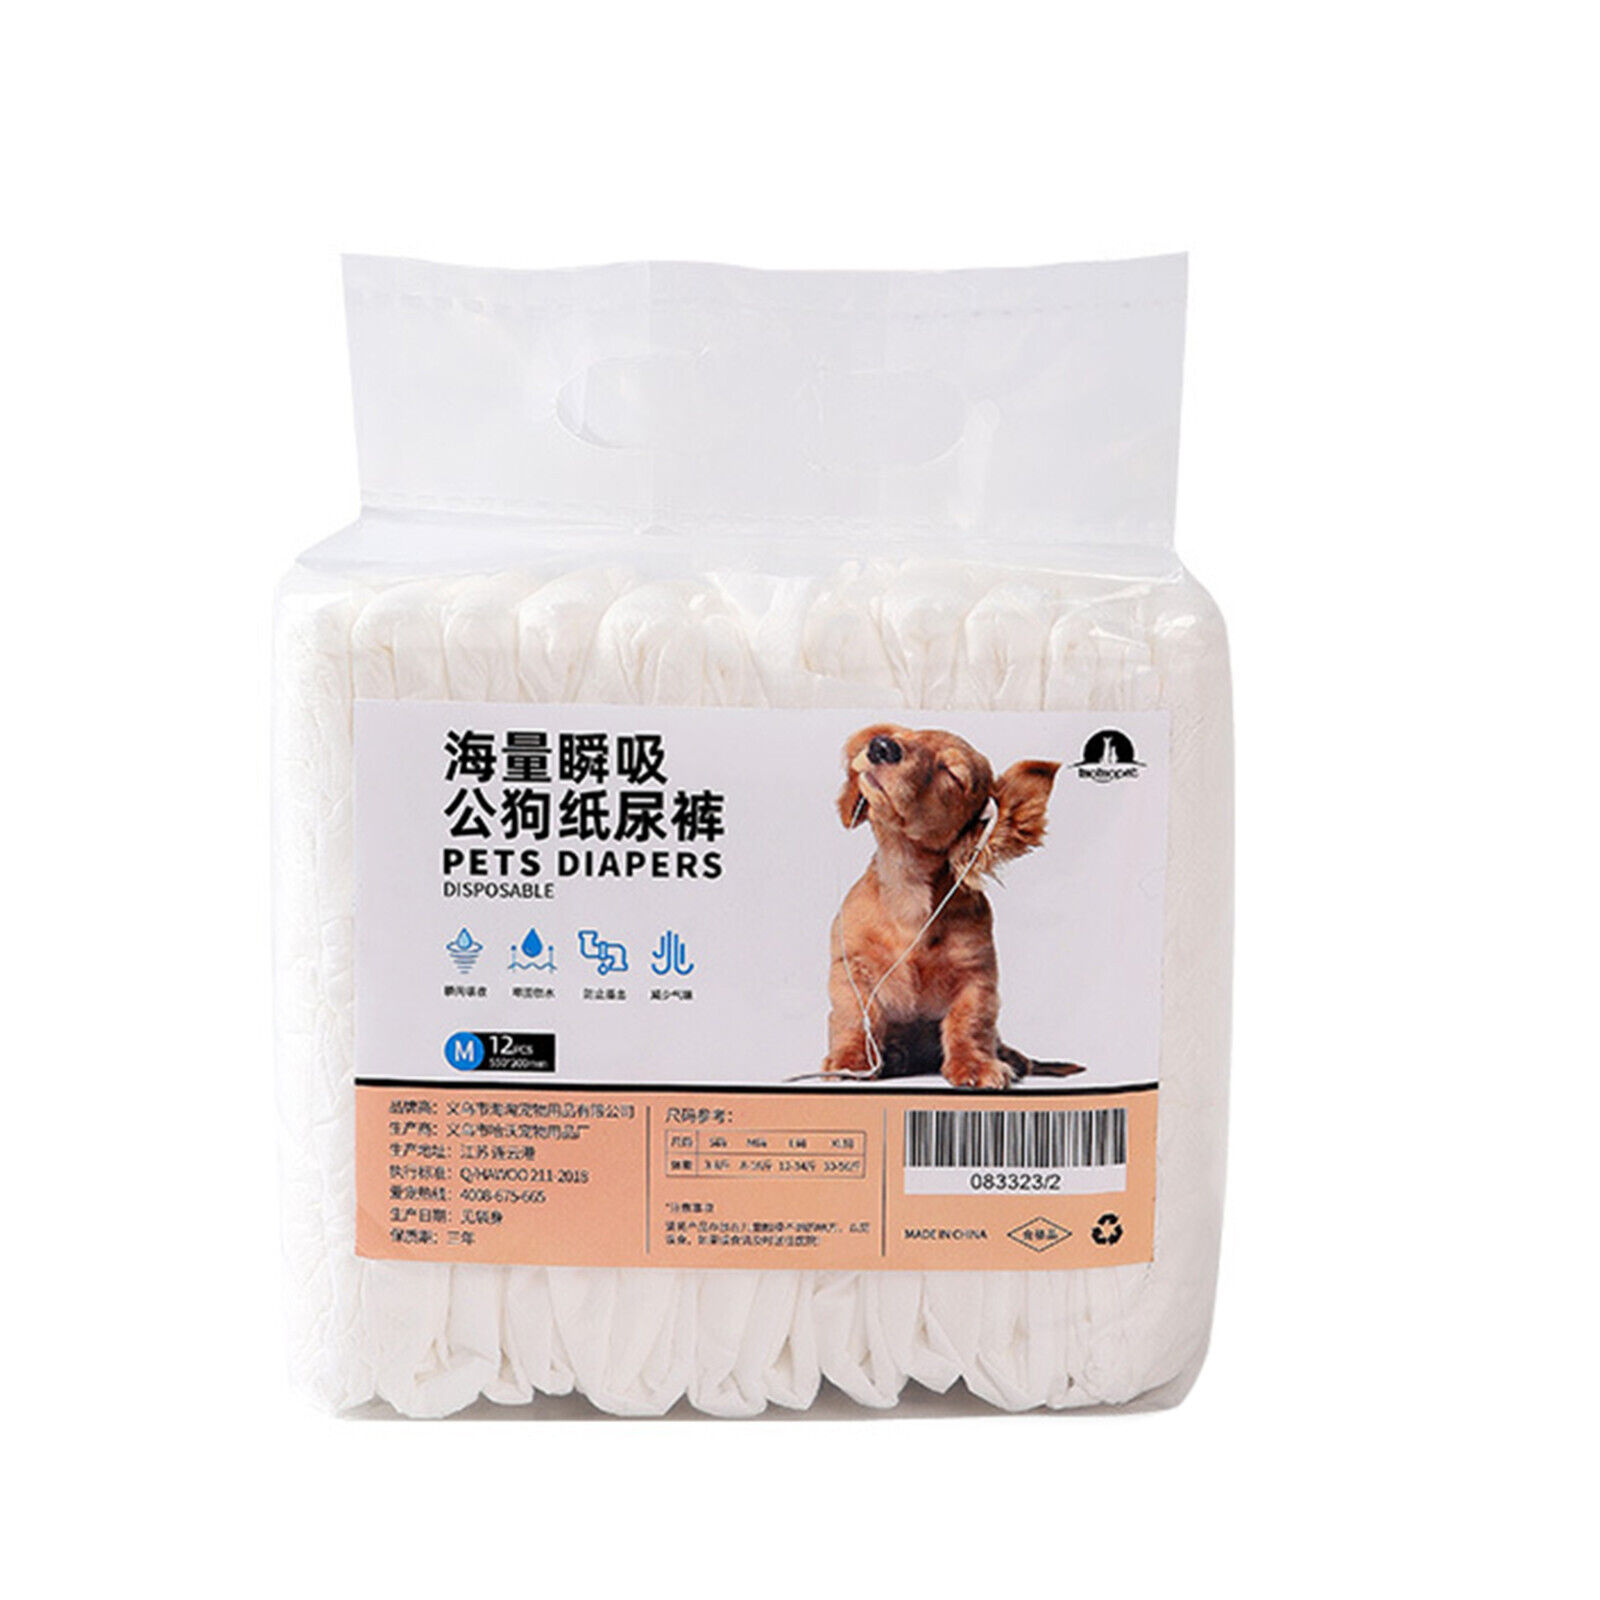 12pcs Pet Sanitary Pants Soft Touch Tear-resistant Disposable Dog Sanitary Pants Unbranded - фотография #10